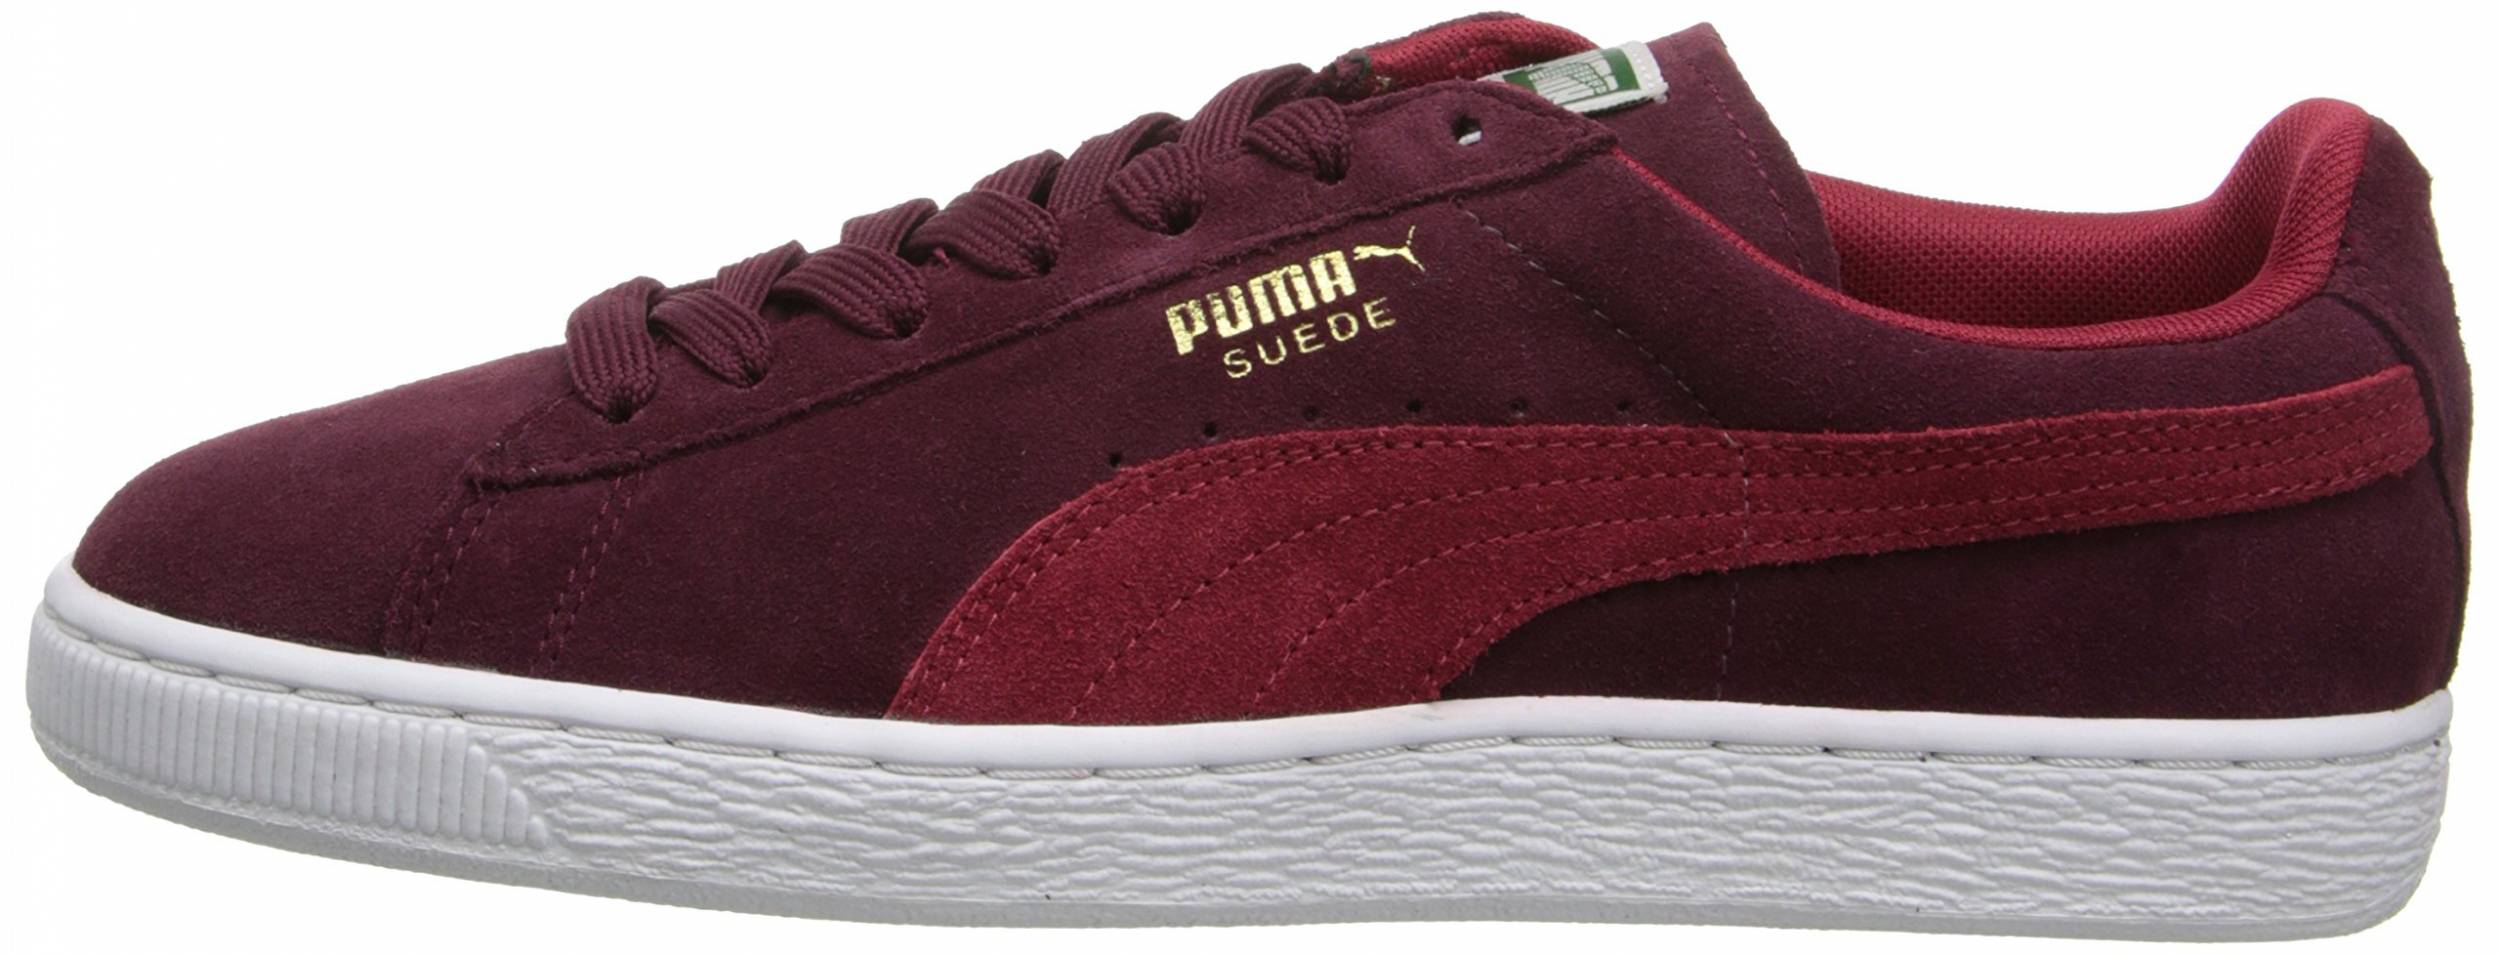 burgundy puma shoes